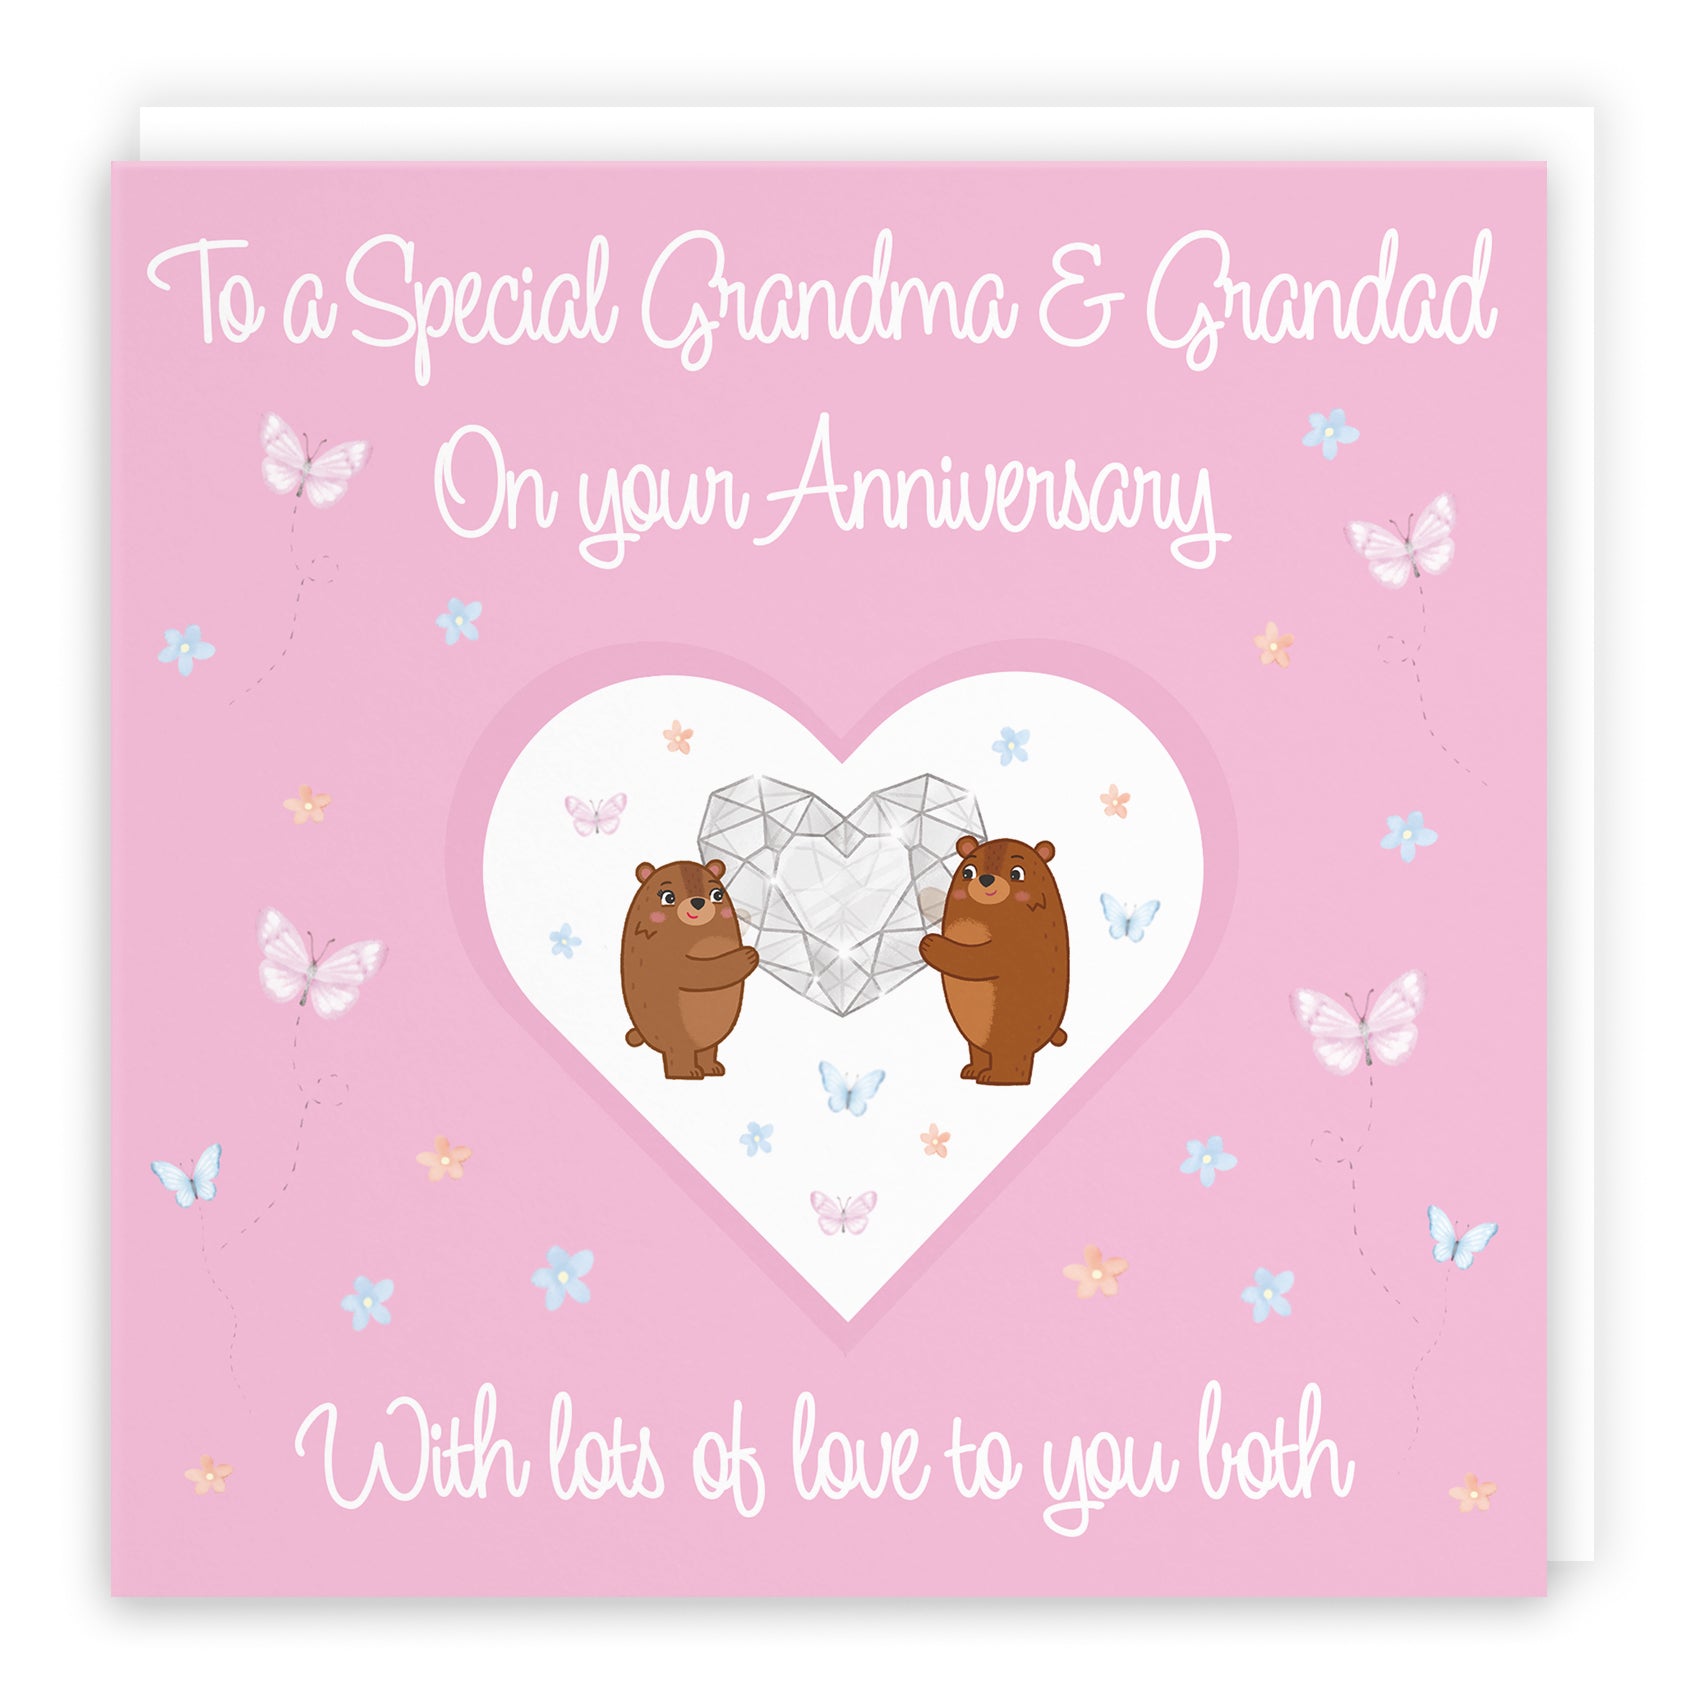 Grandma And Grandad Anniversary Card Romantic Meadows